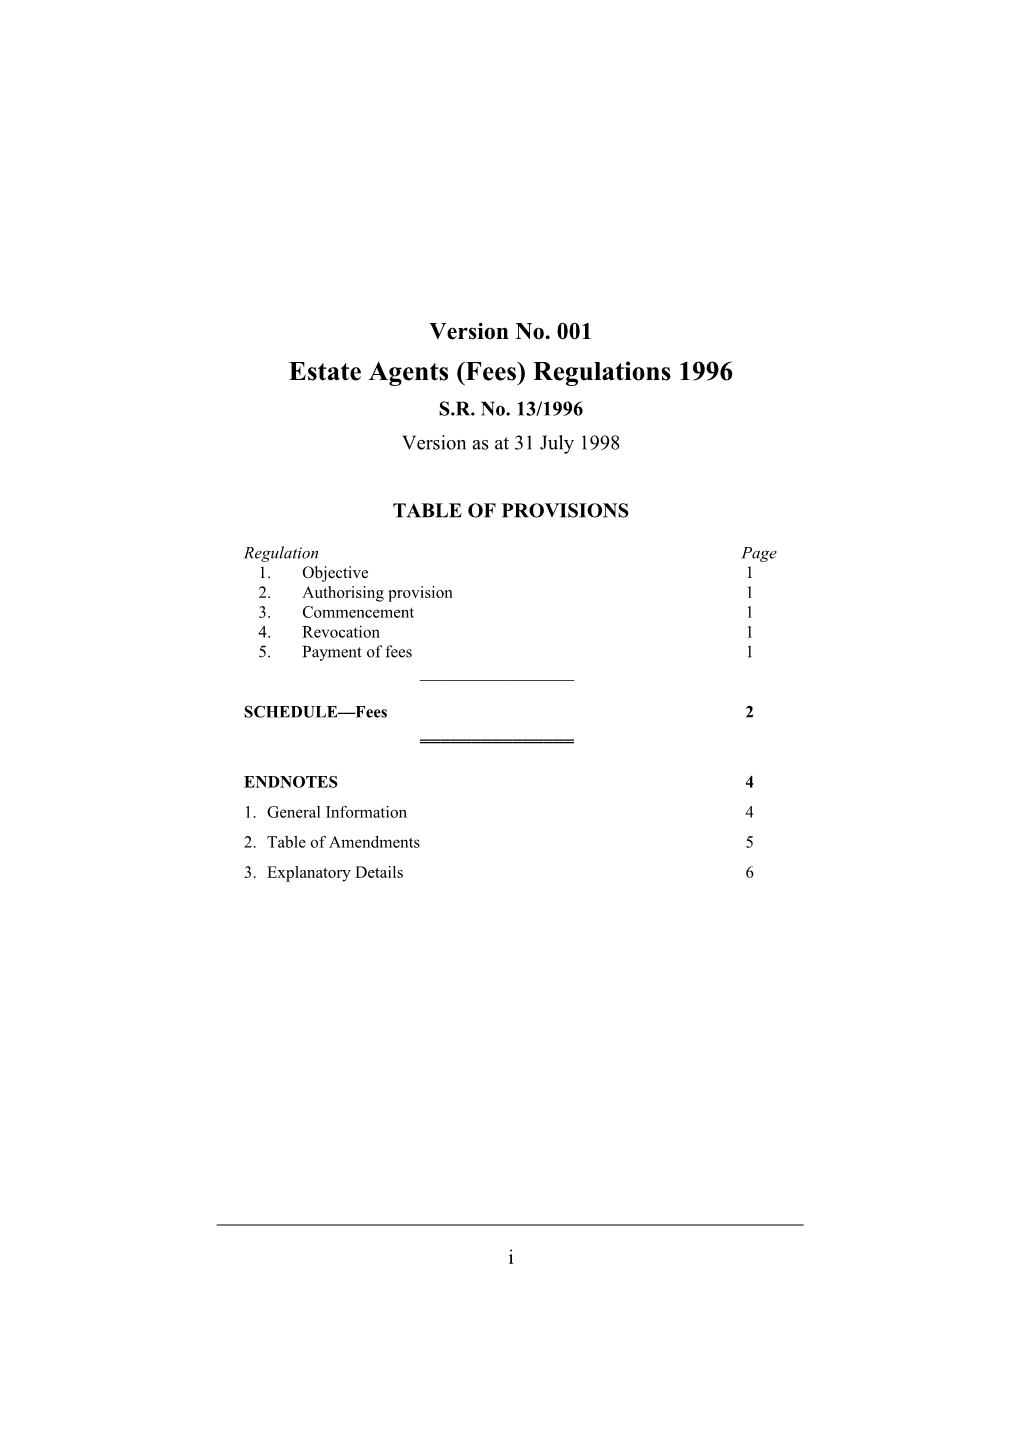 Estate Agents (Fees) Regulations 1996